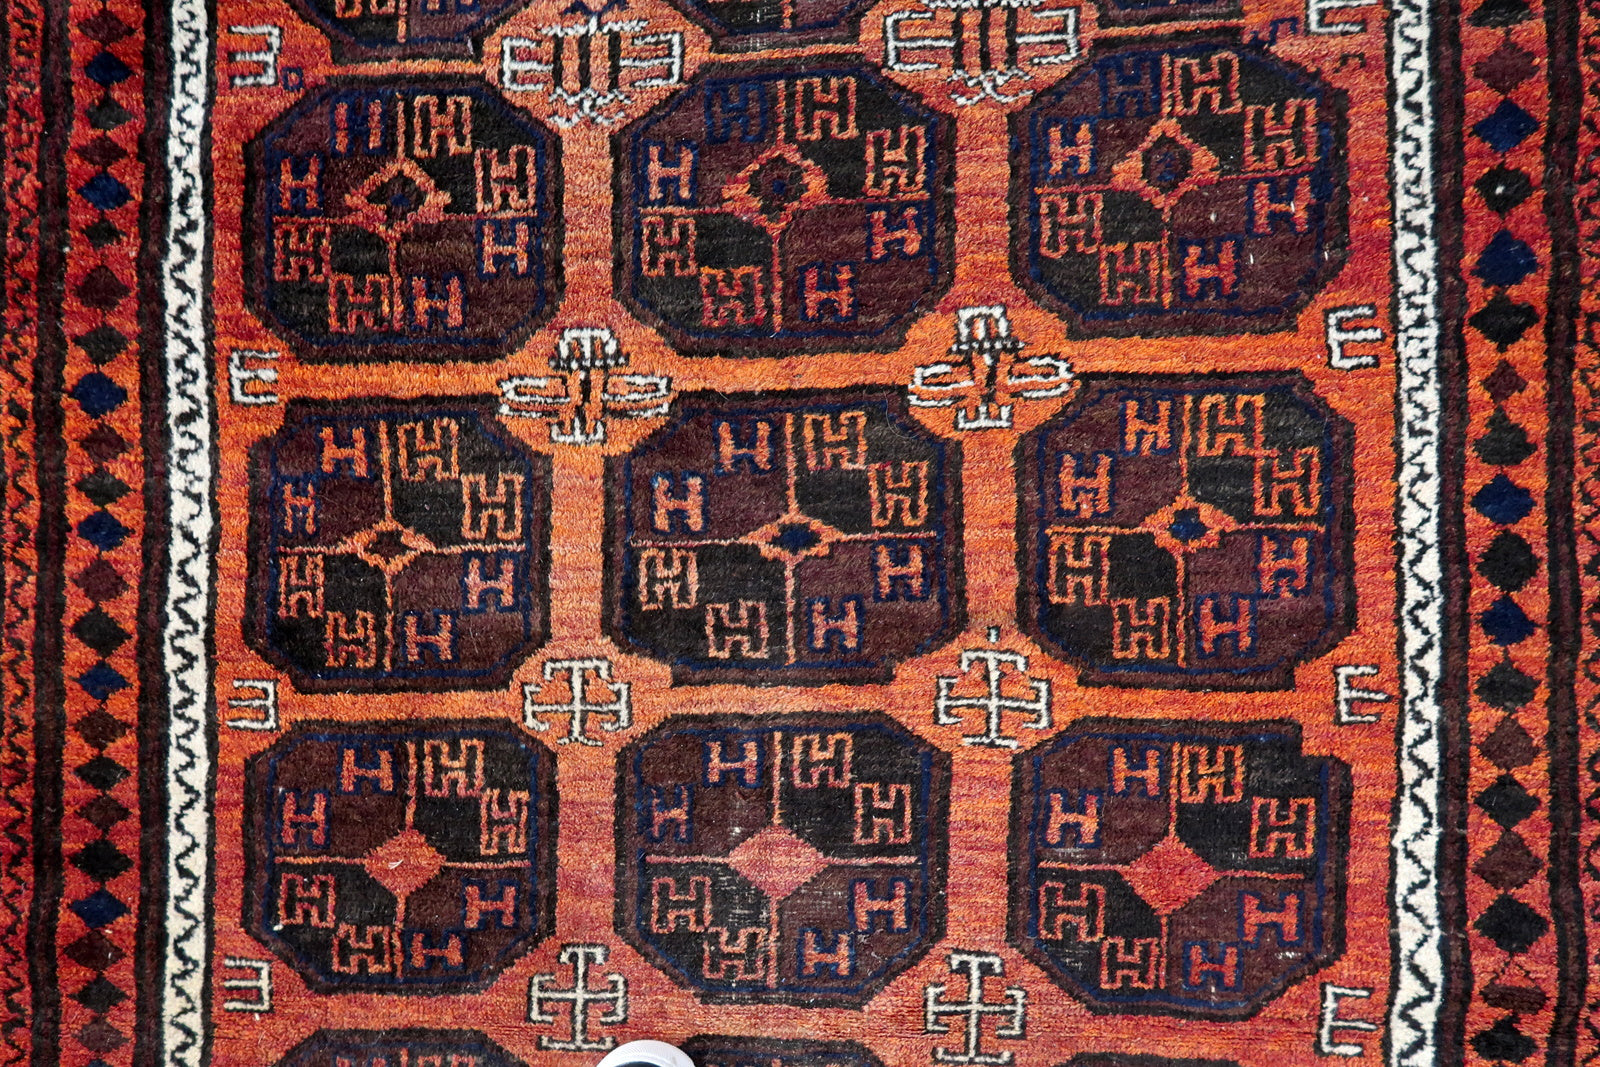 Handmade antique Afghan Baluch rug 1900s